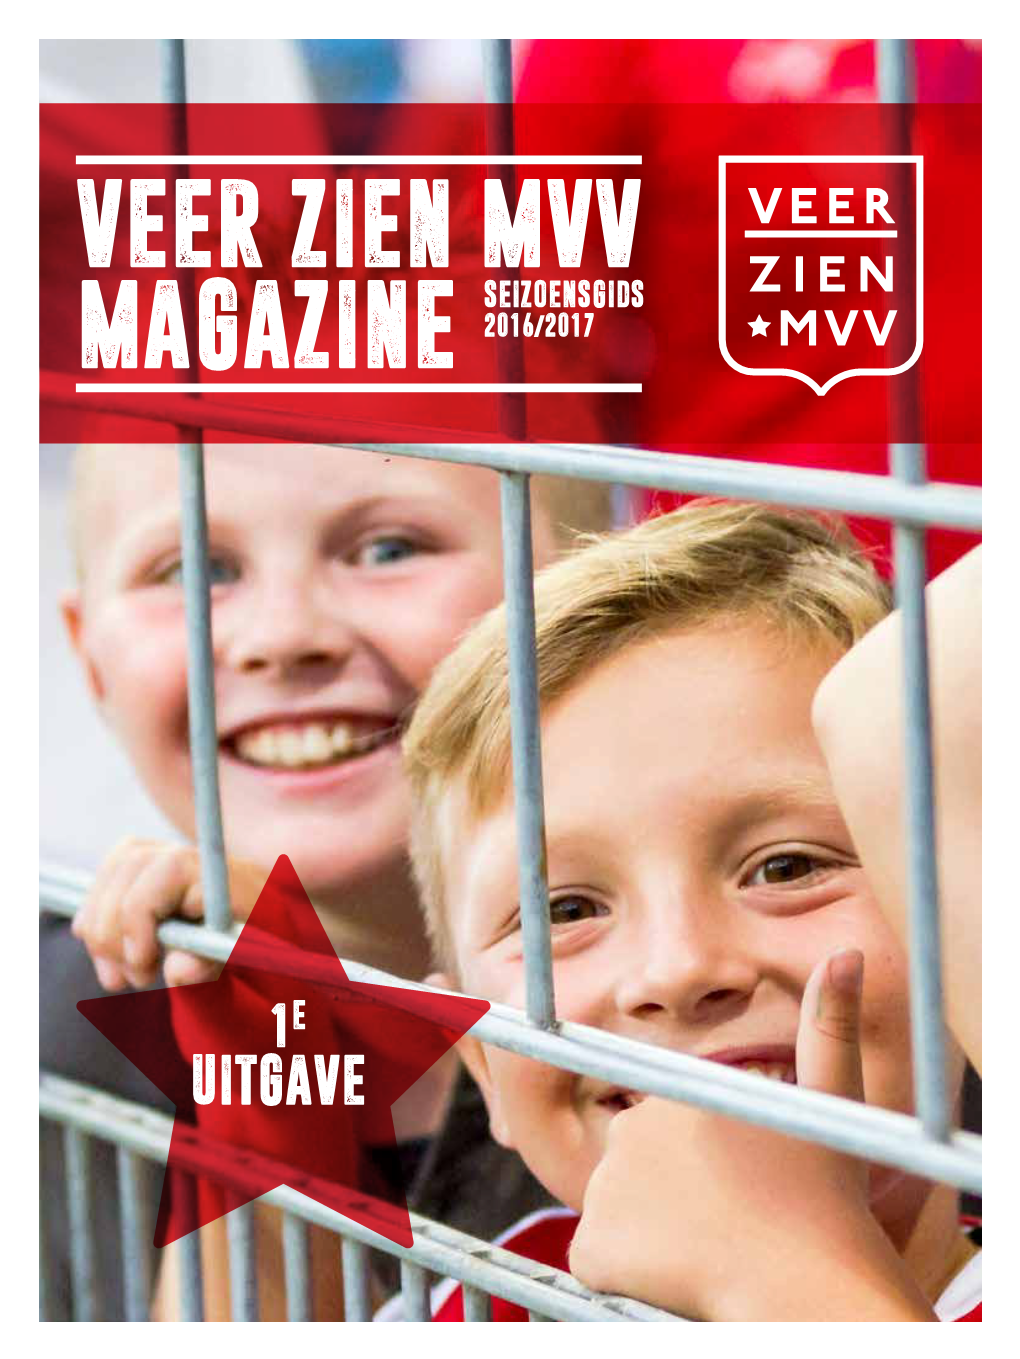 Veer Zien Mvv Seizoensgids Magazine 2016/2017